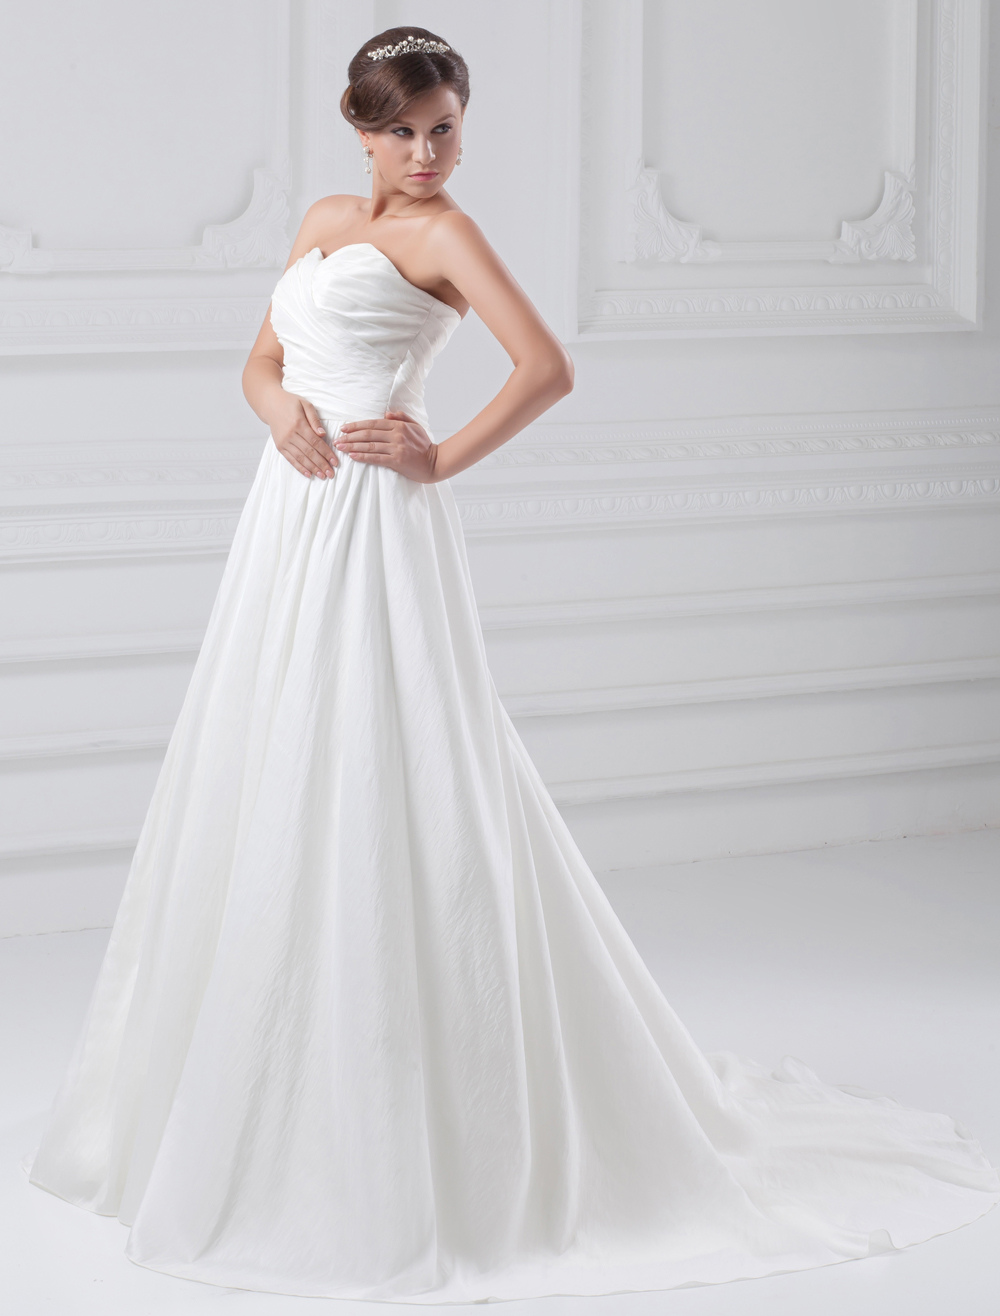 White A-line Sweetheart Ruched Taffeta Bridal Wedding Dress - Milanoo.com